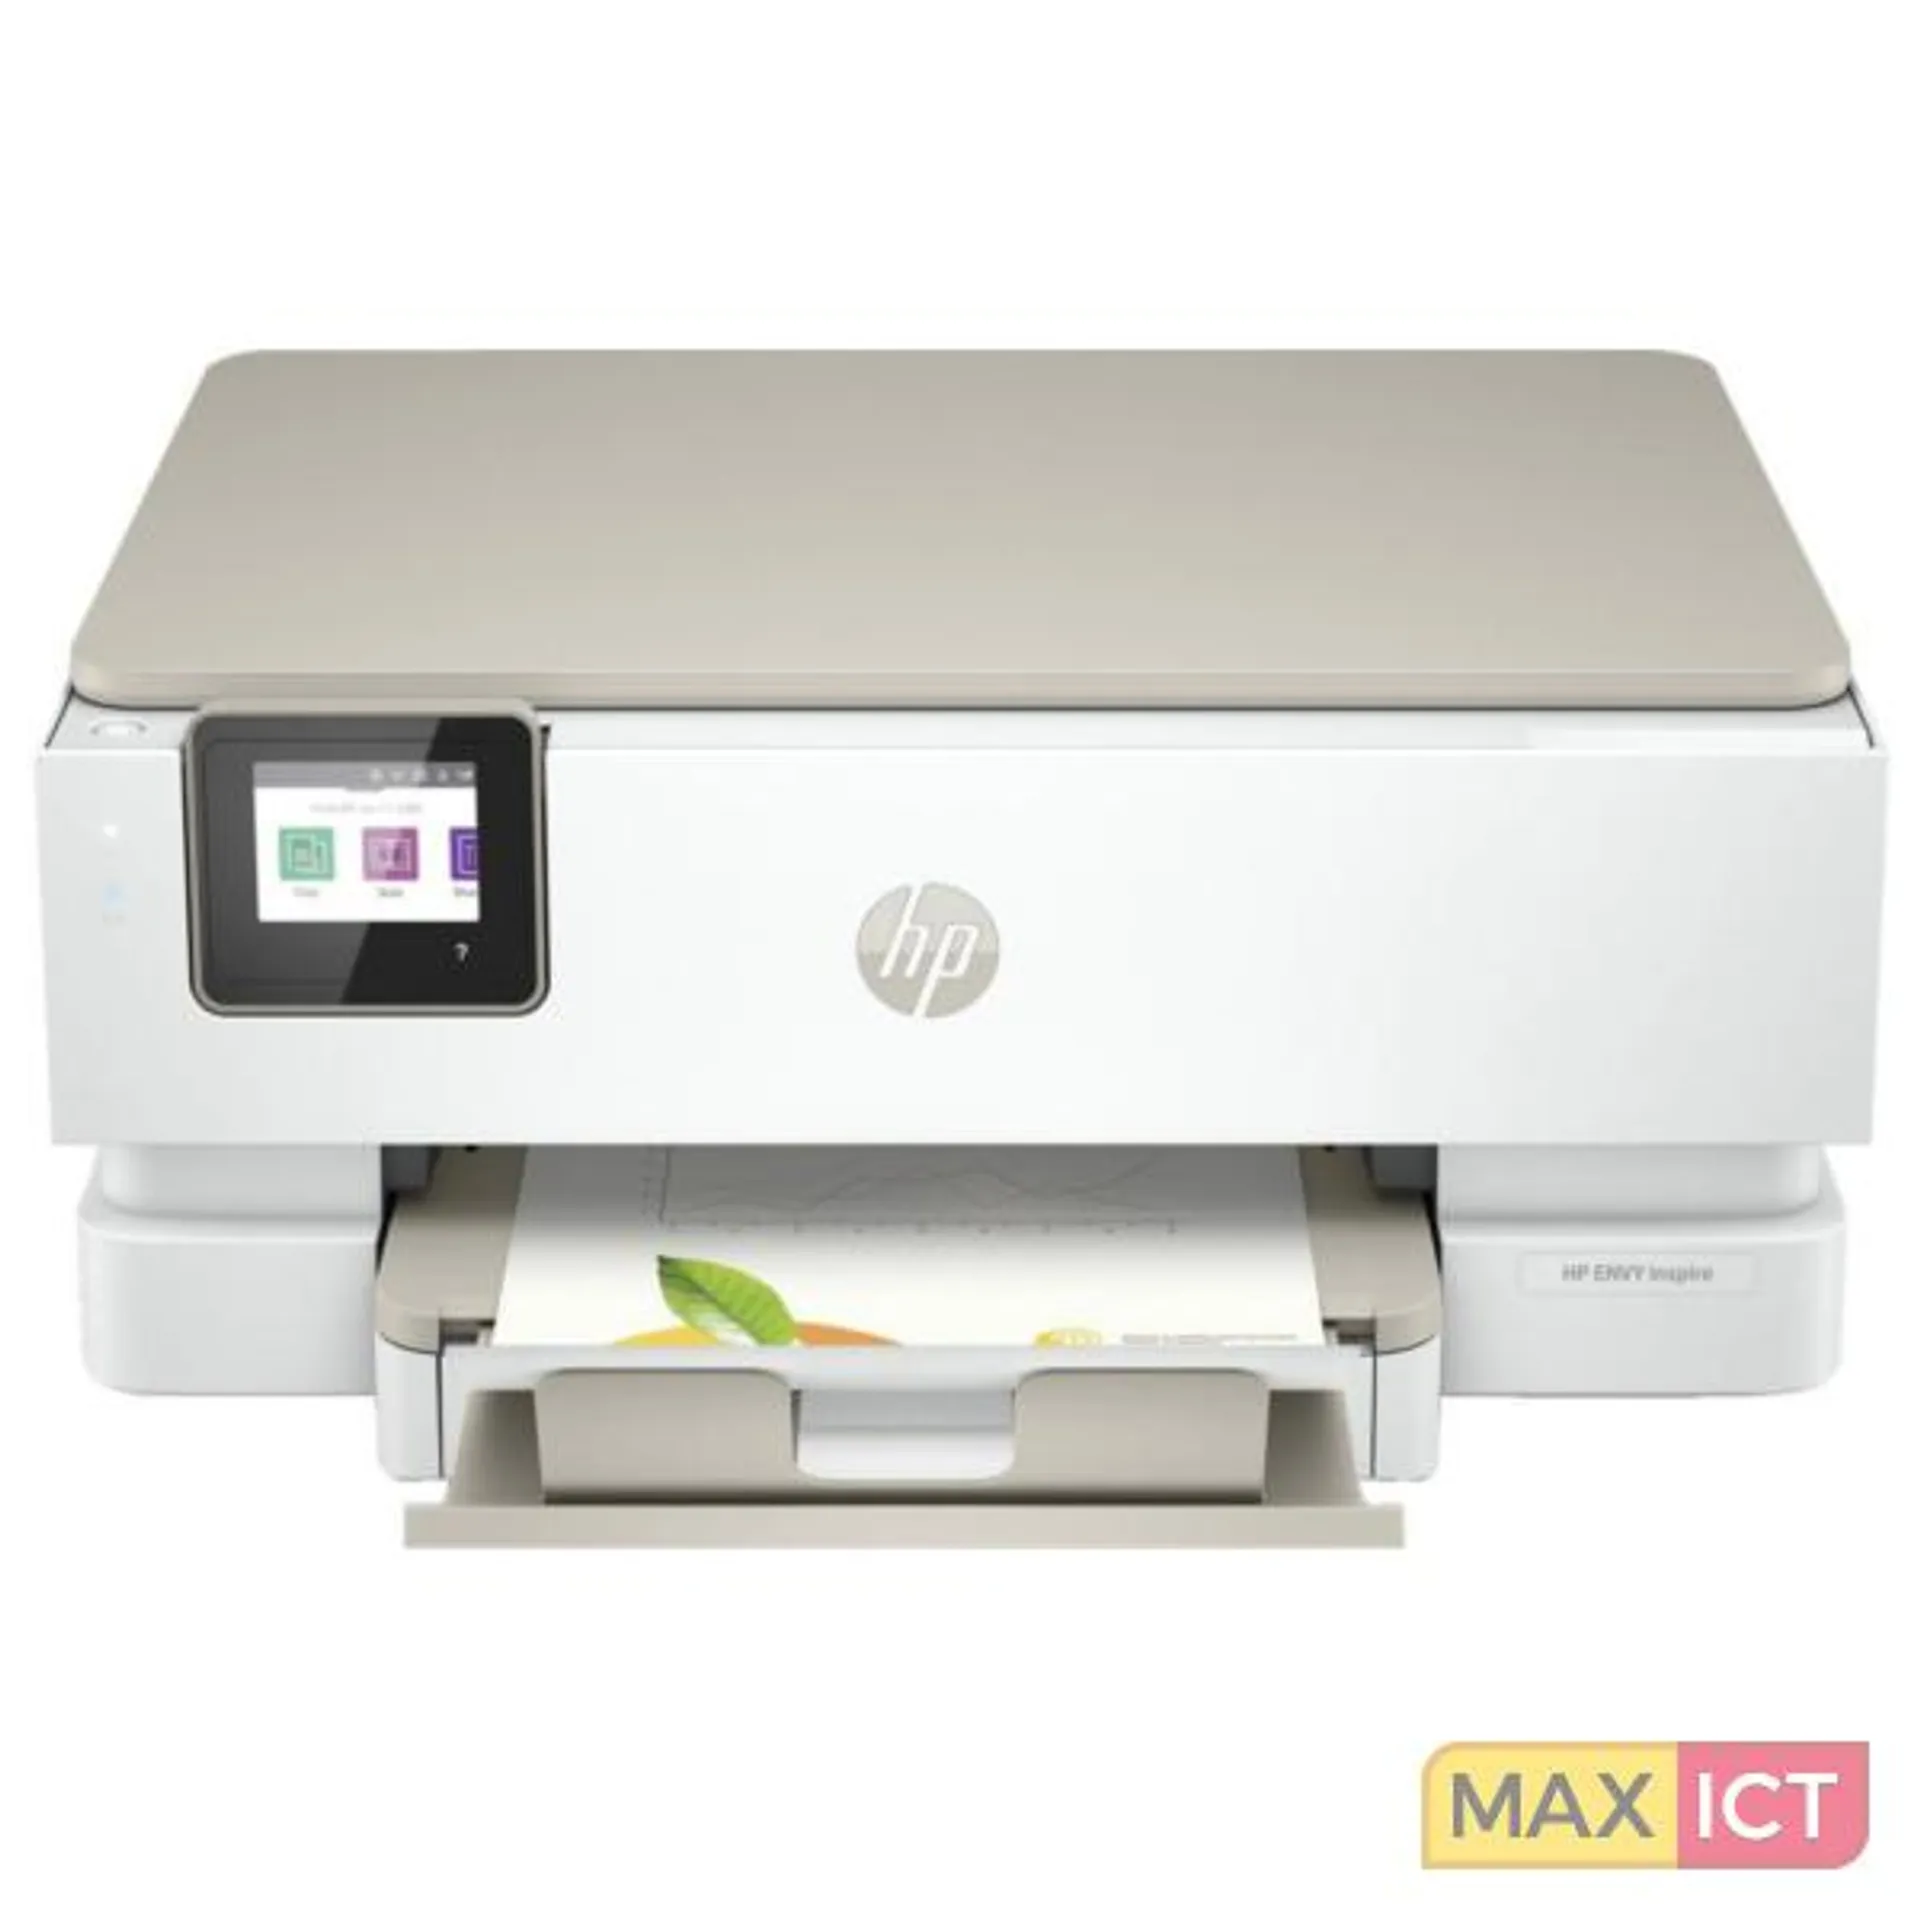 HP ENVY HP Inspire 7220e All-in-One printer